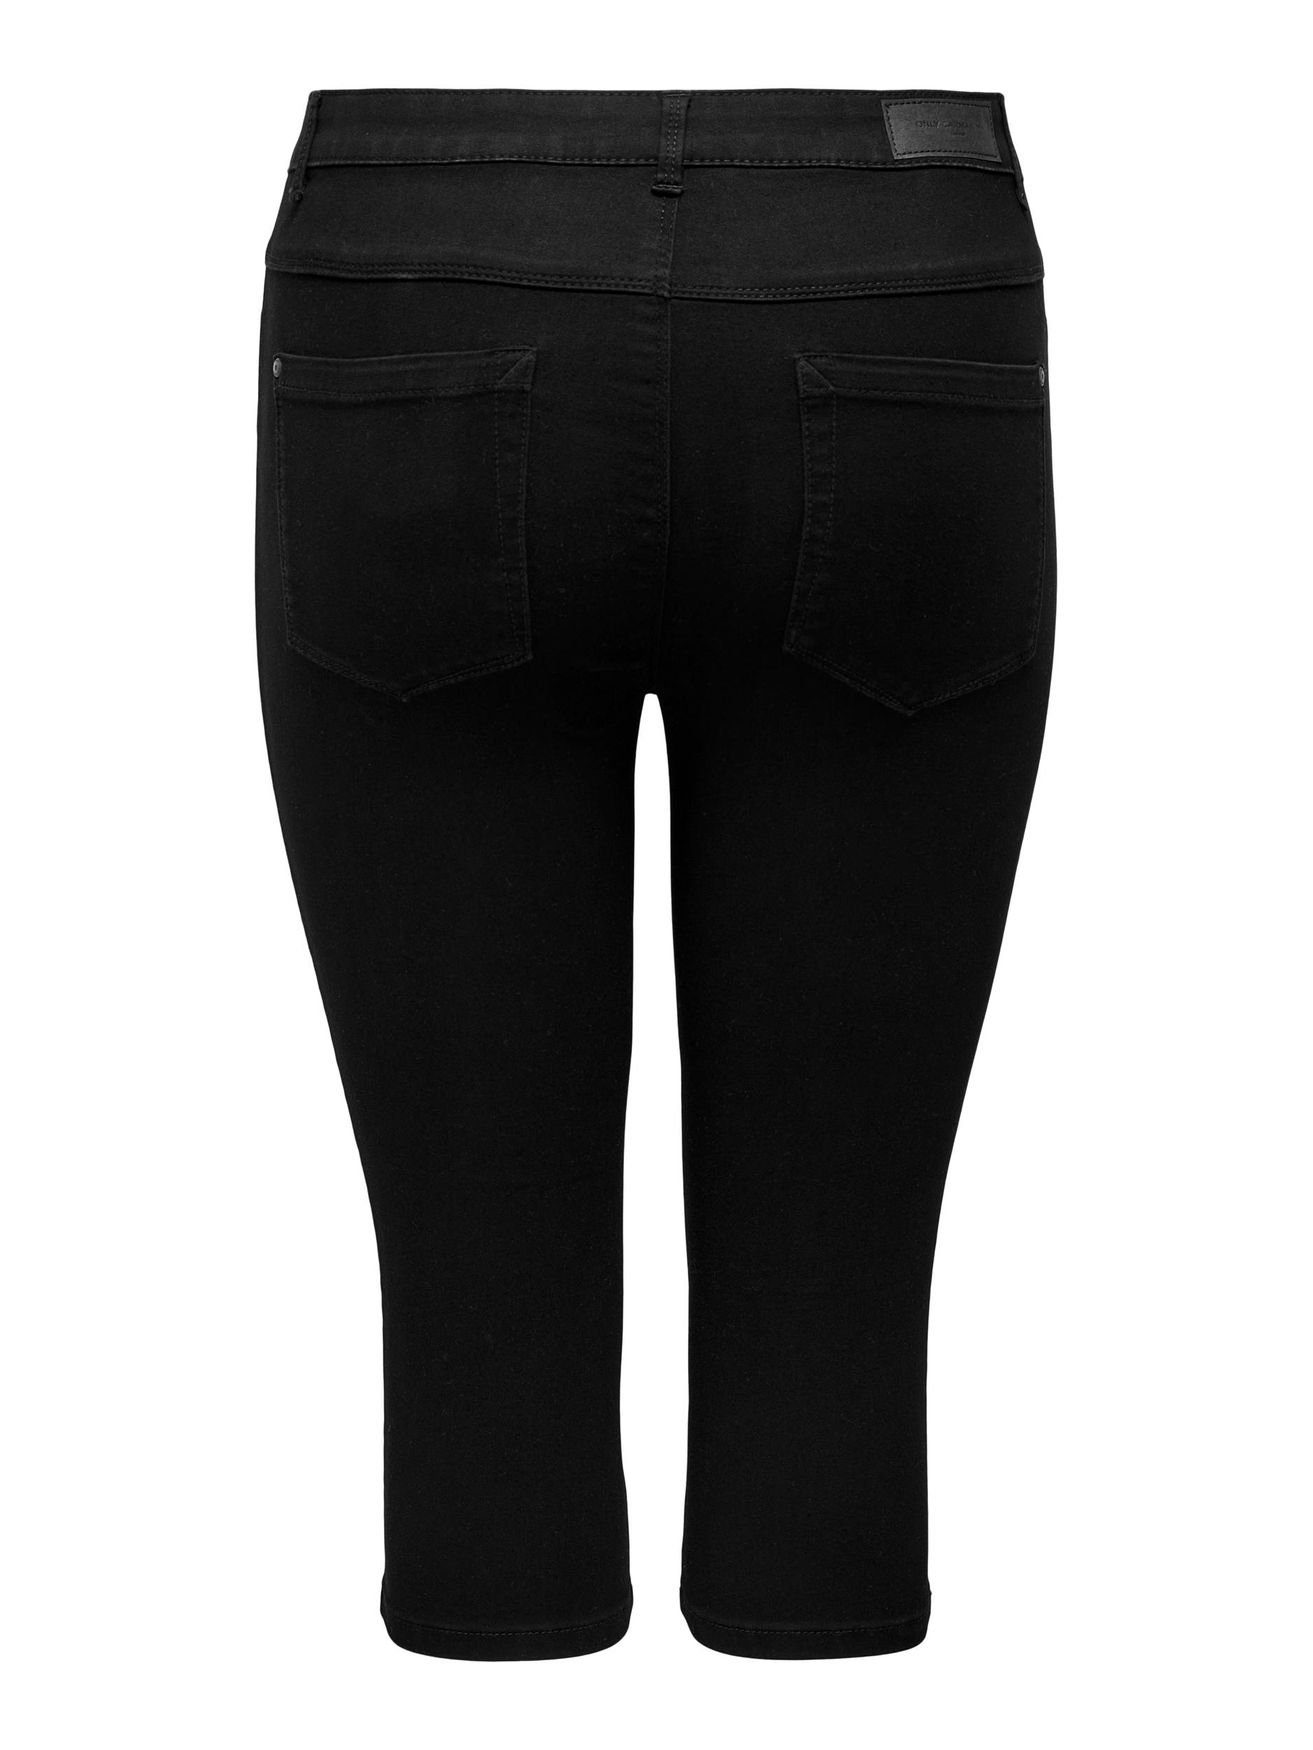 CARAUGUSTA Size Plus ONLY Jeans Caprihose Übergröße CARMAKOMA Shorts Schwarz 4794 3/4Capri in Denim Hose